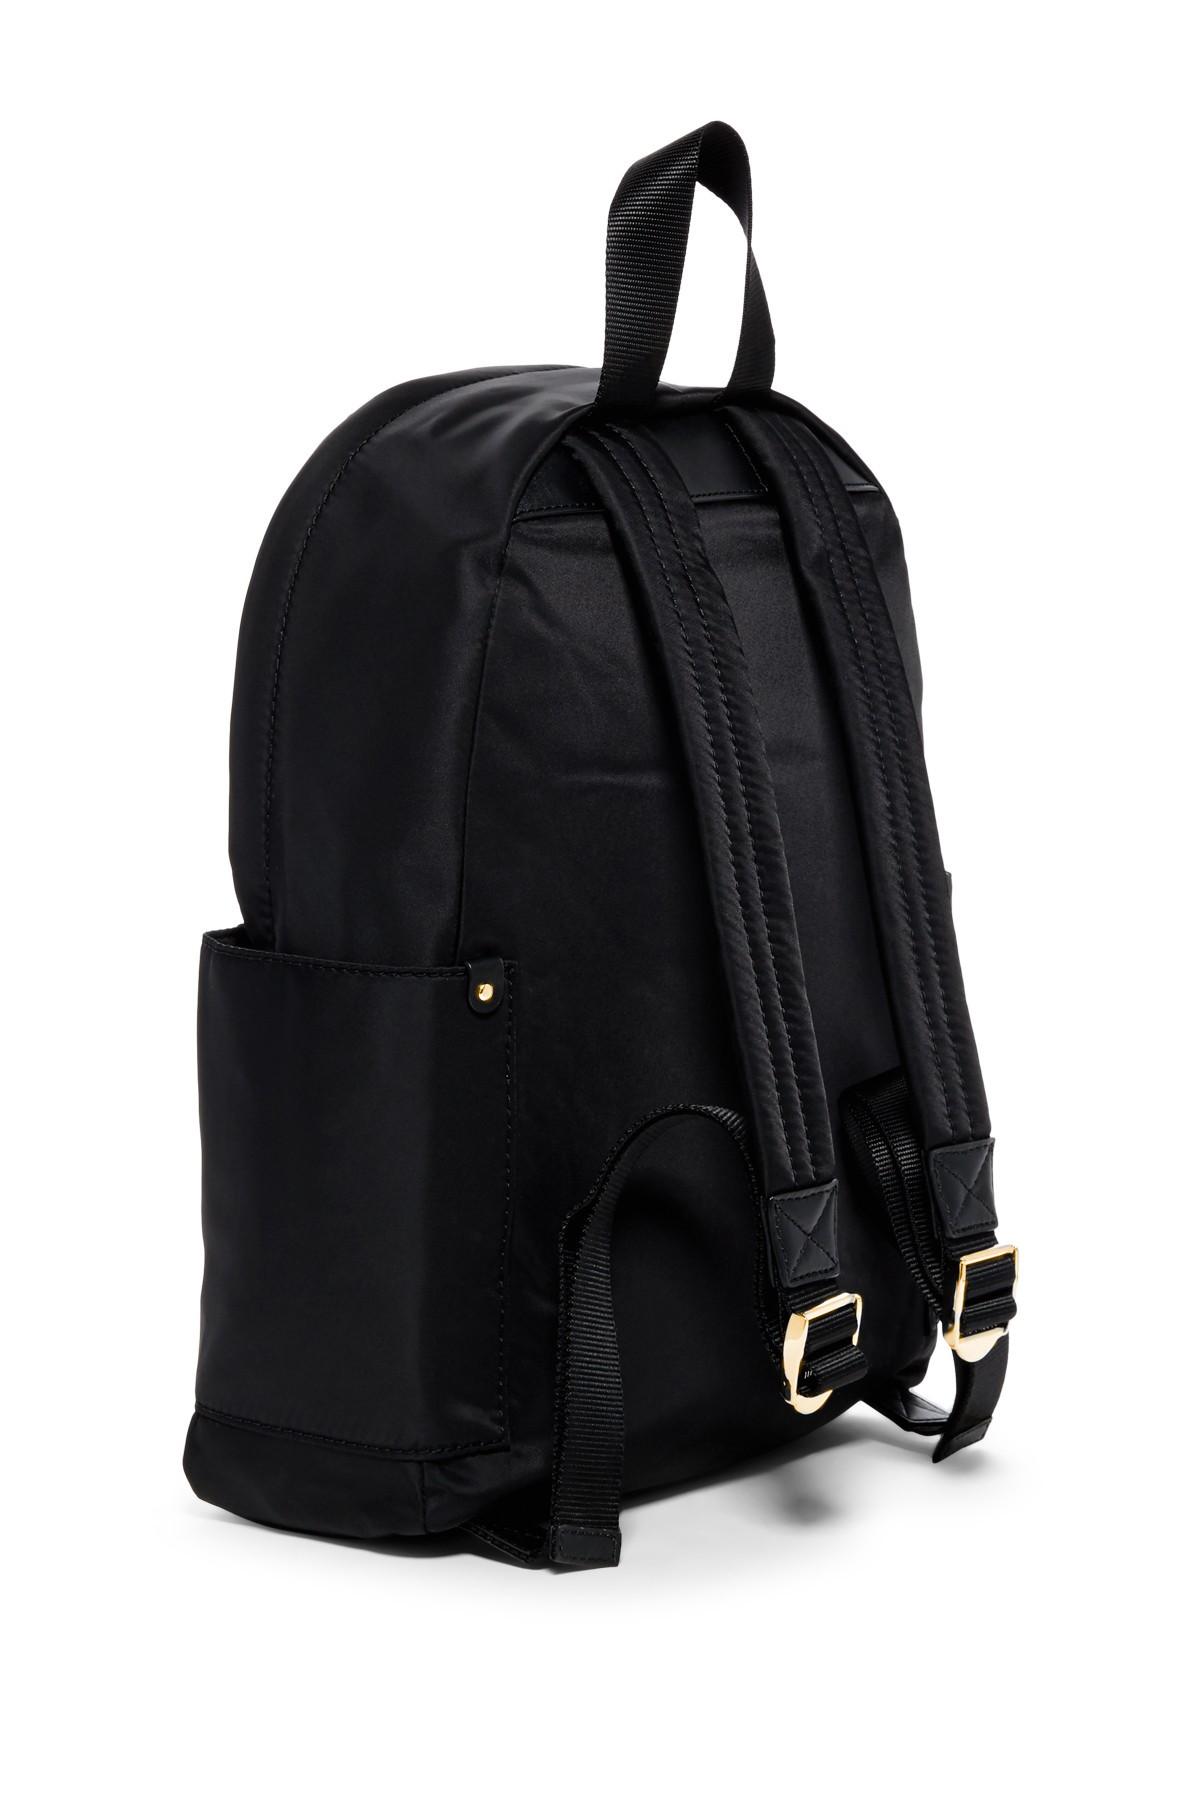 Marc Jacobs Preppy Nylon Backpack in Black - Lyst